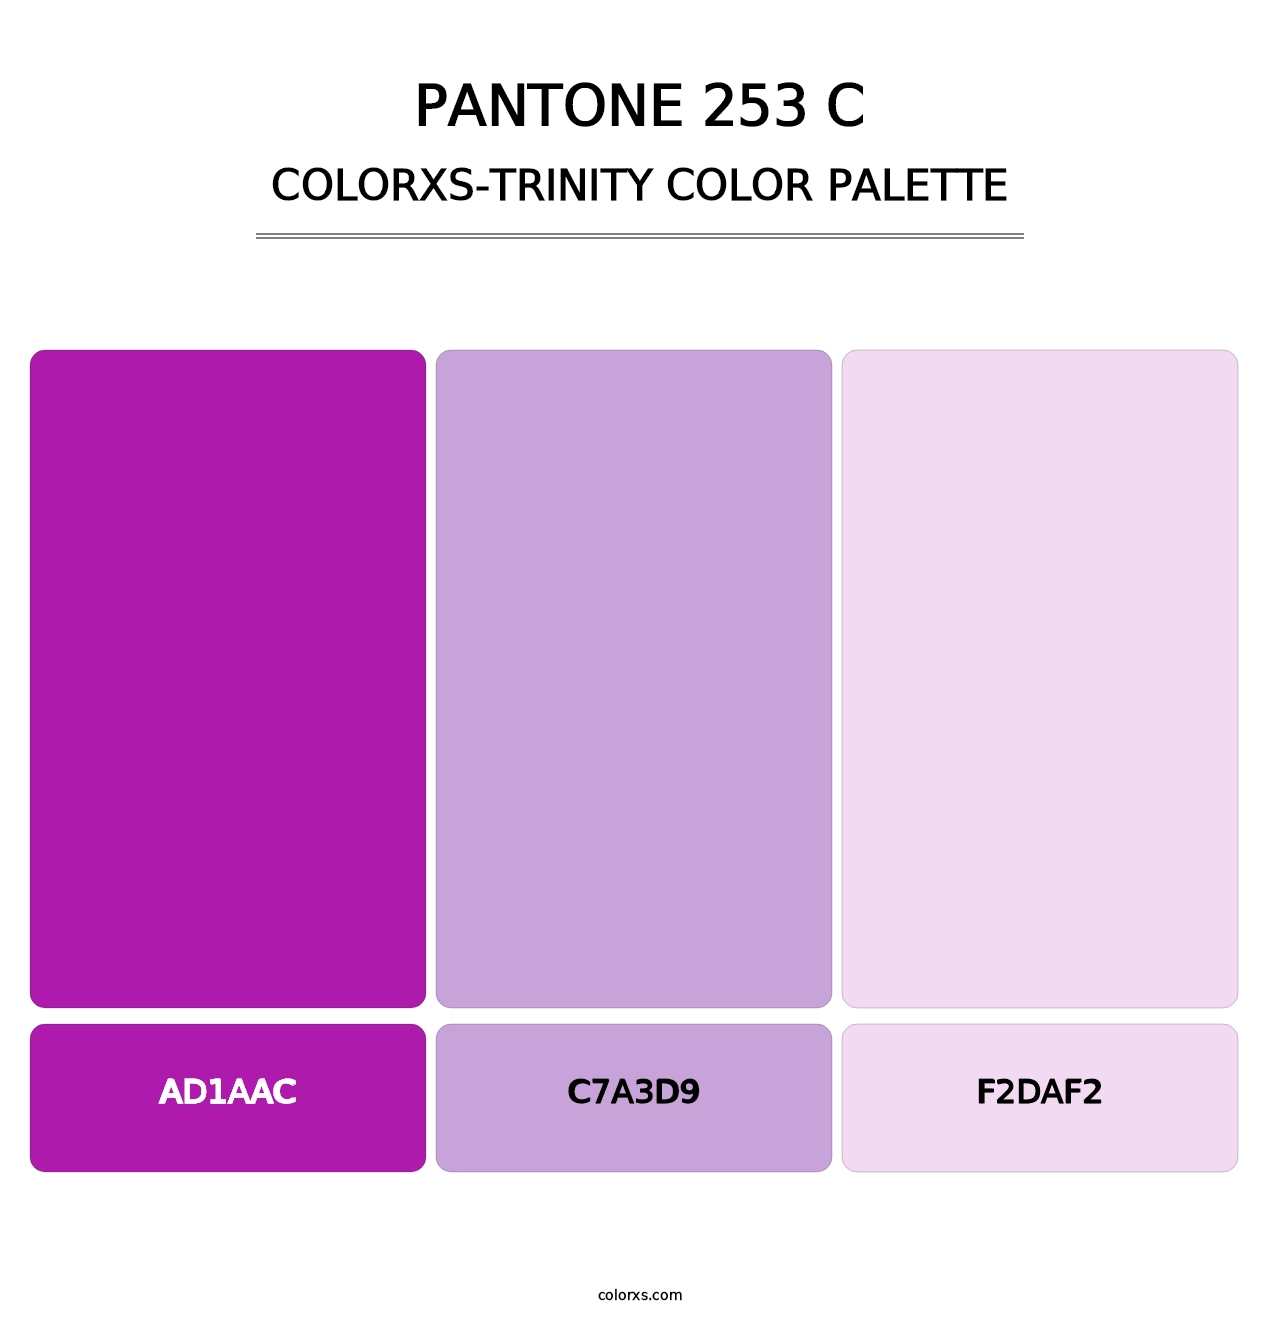 PANTONE 253 C - Colorxs Trinity Palette